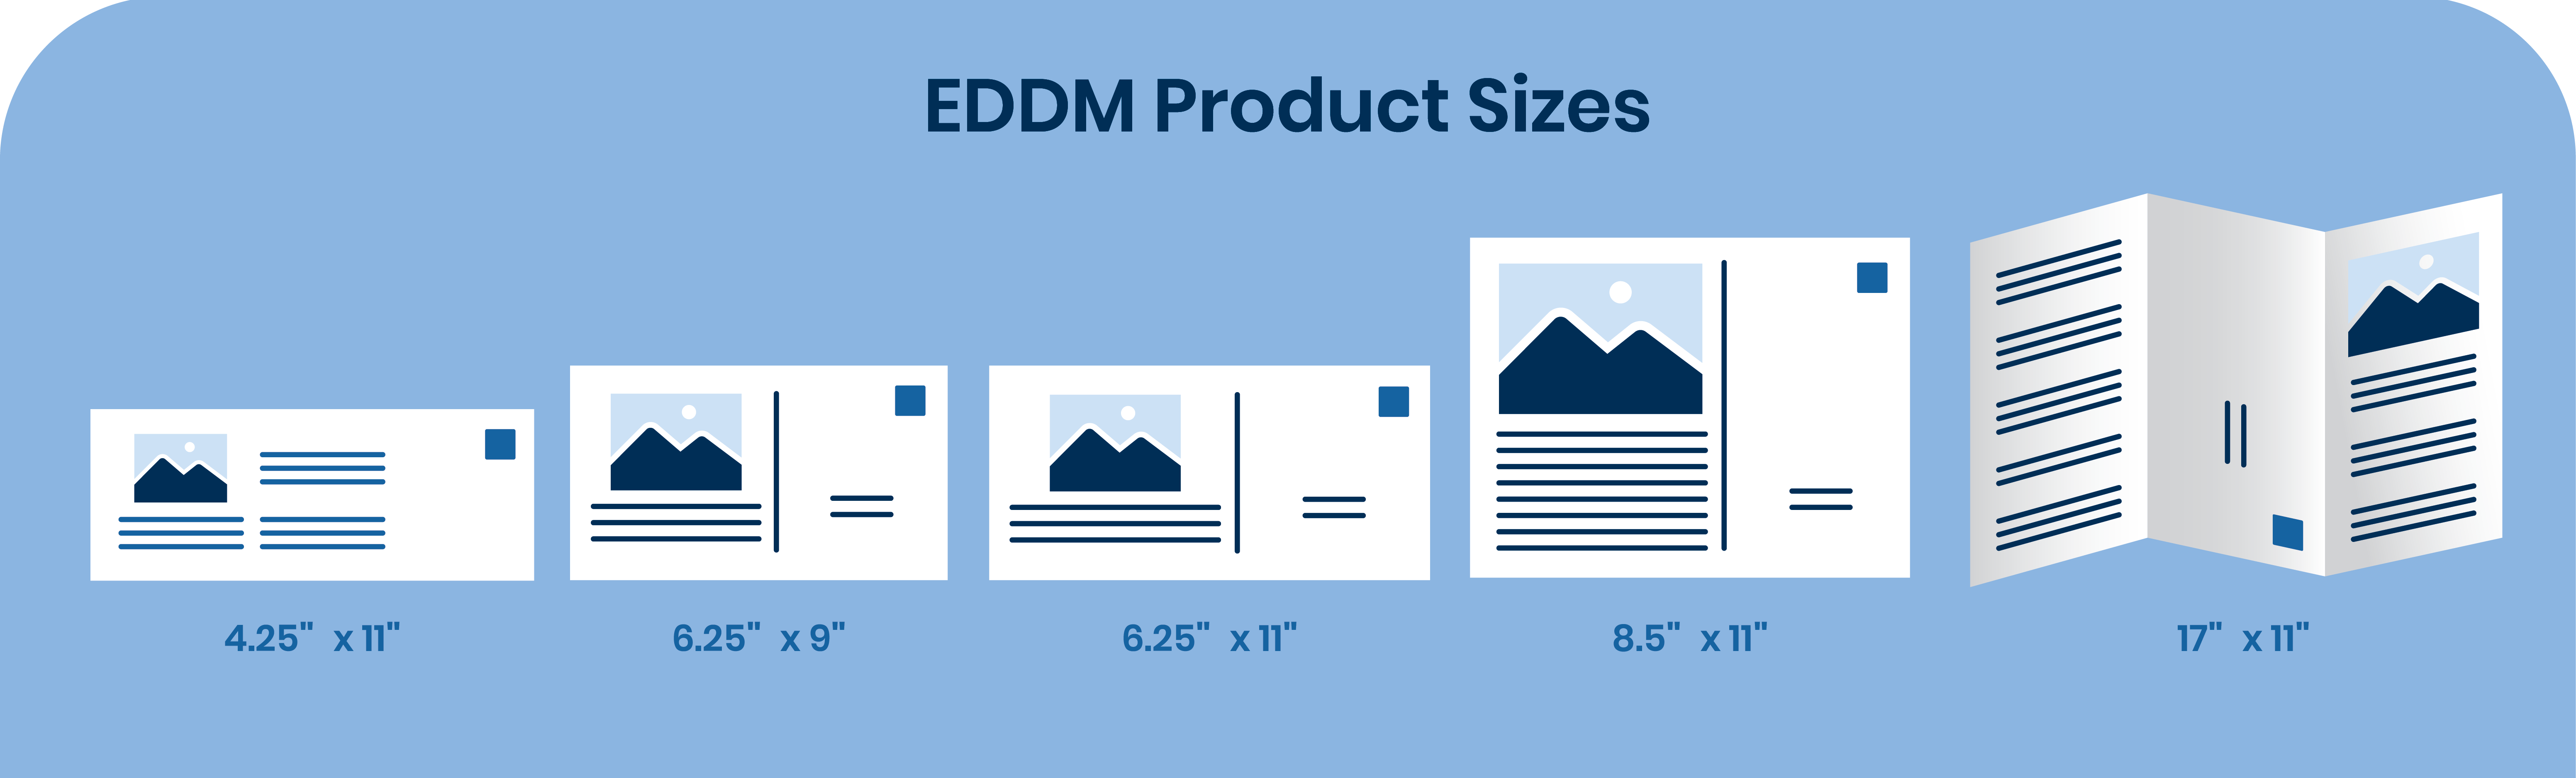 EDDM Postcard sizes for postcard campaigns 